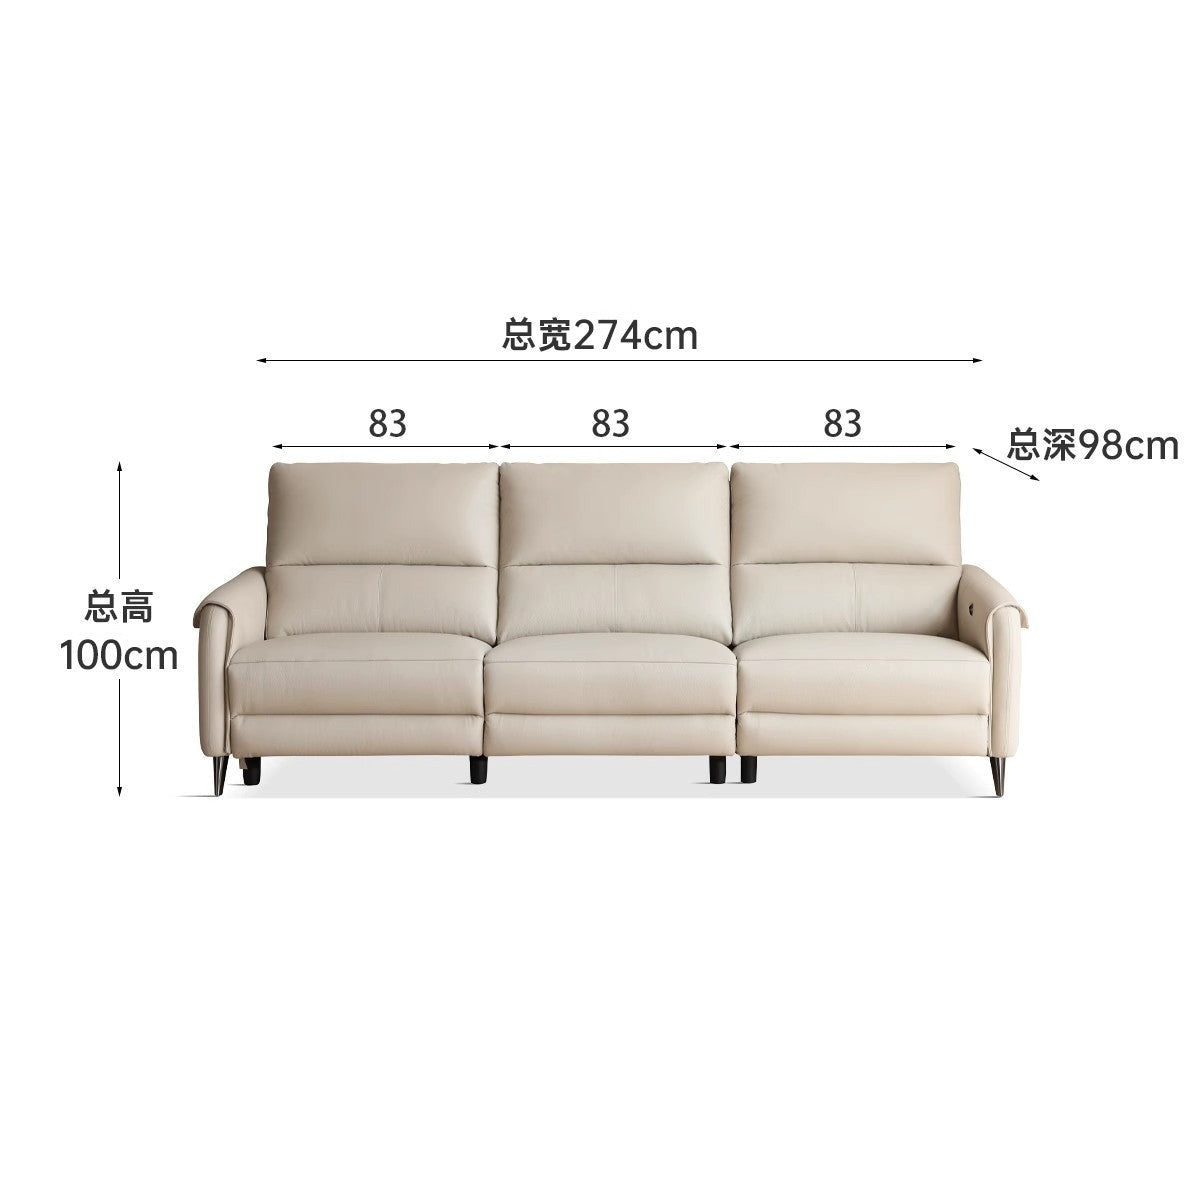 Genuine leather zero wall multifunctional electric sofa, top layer cowhide sofa+